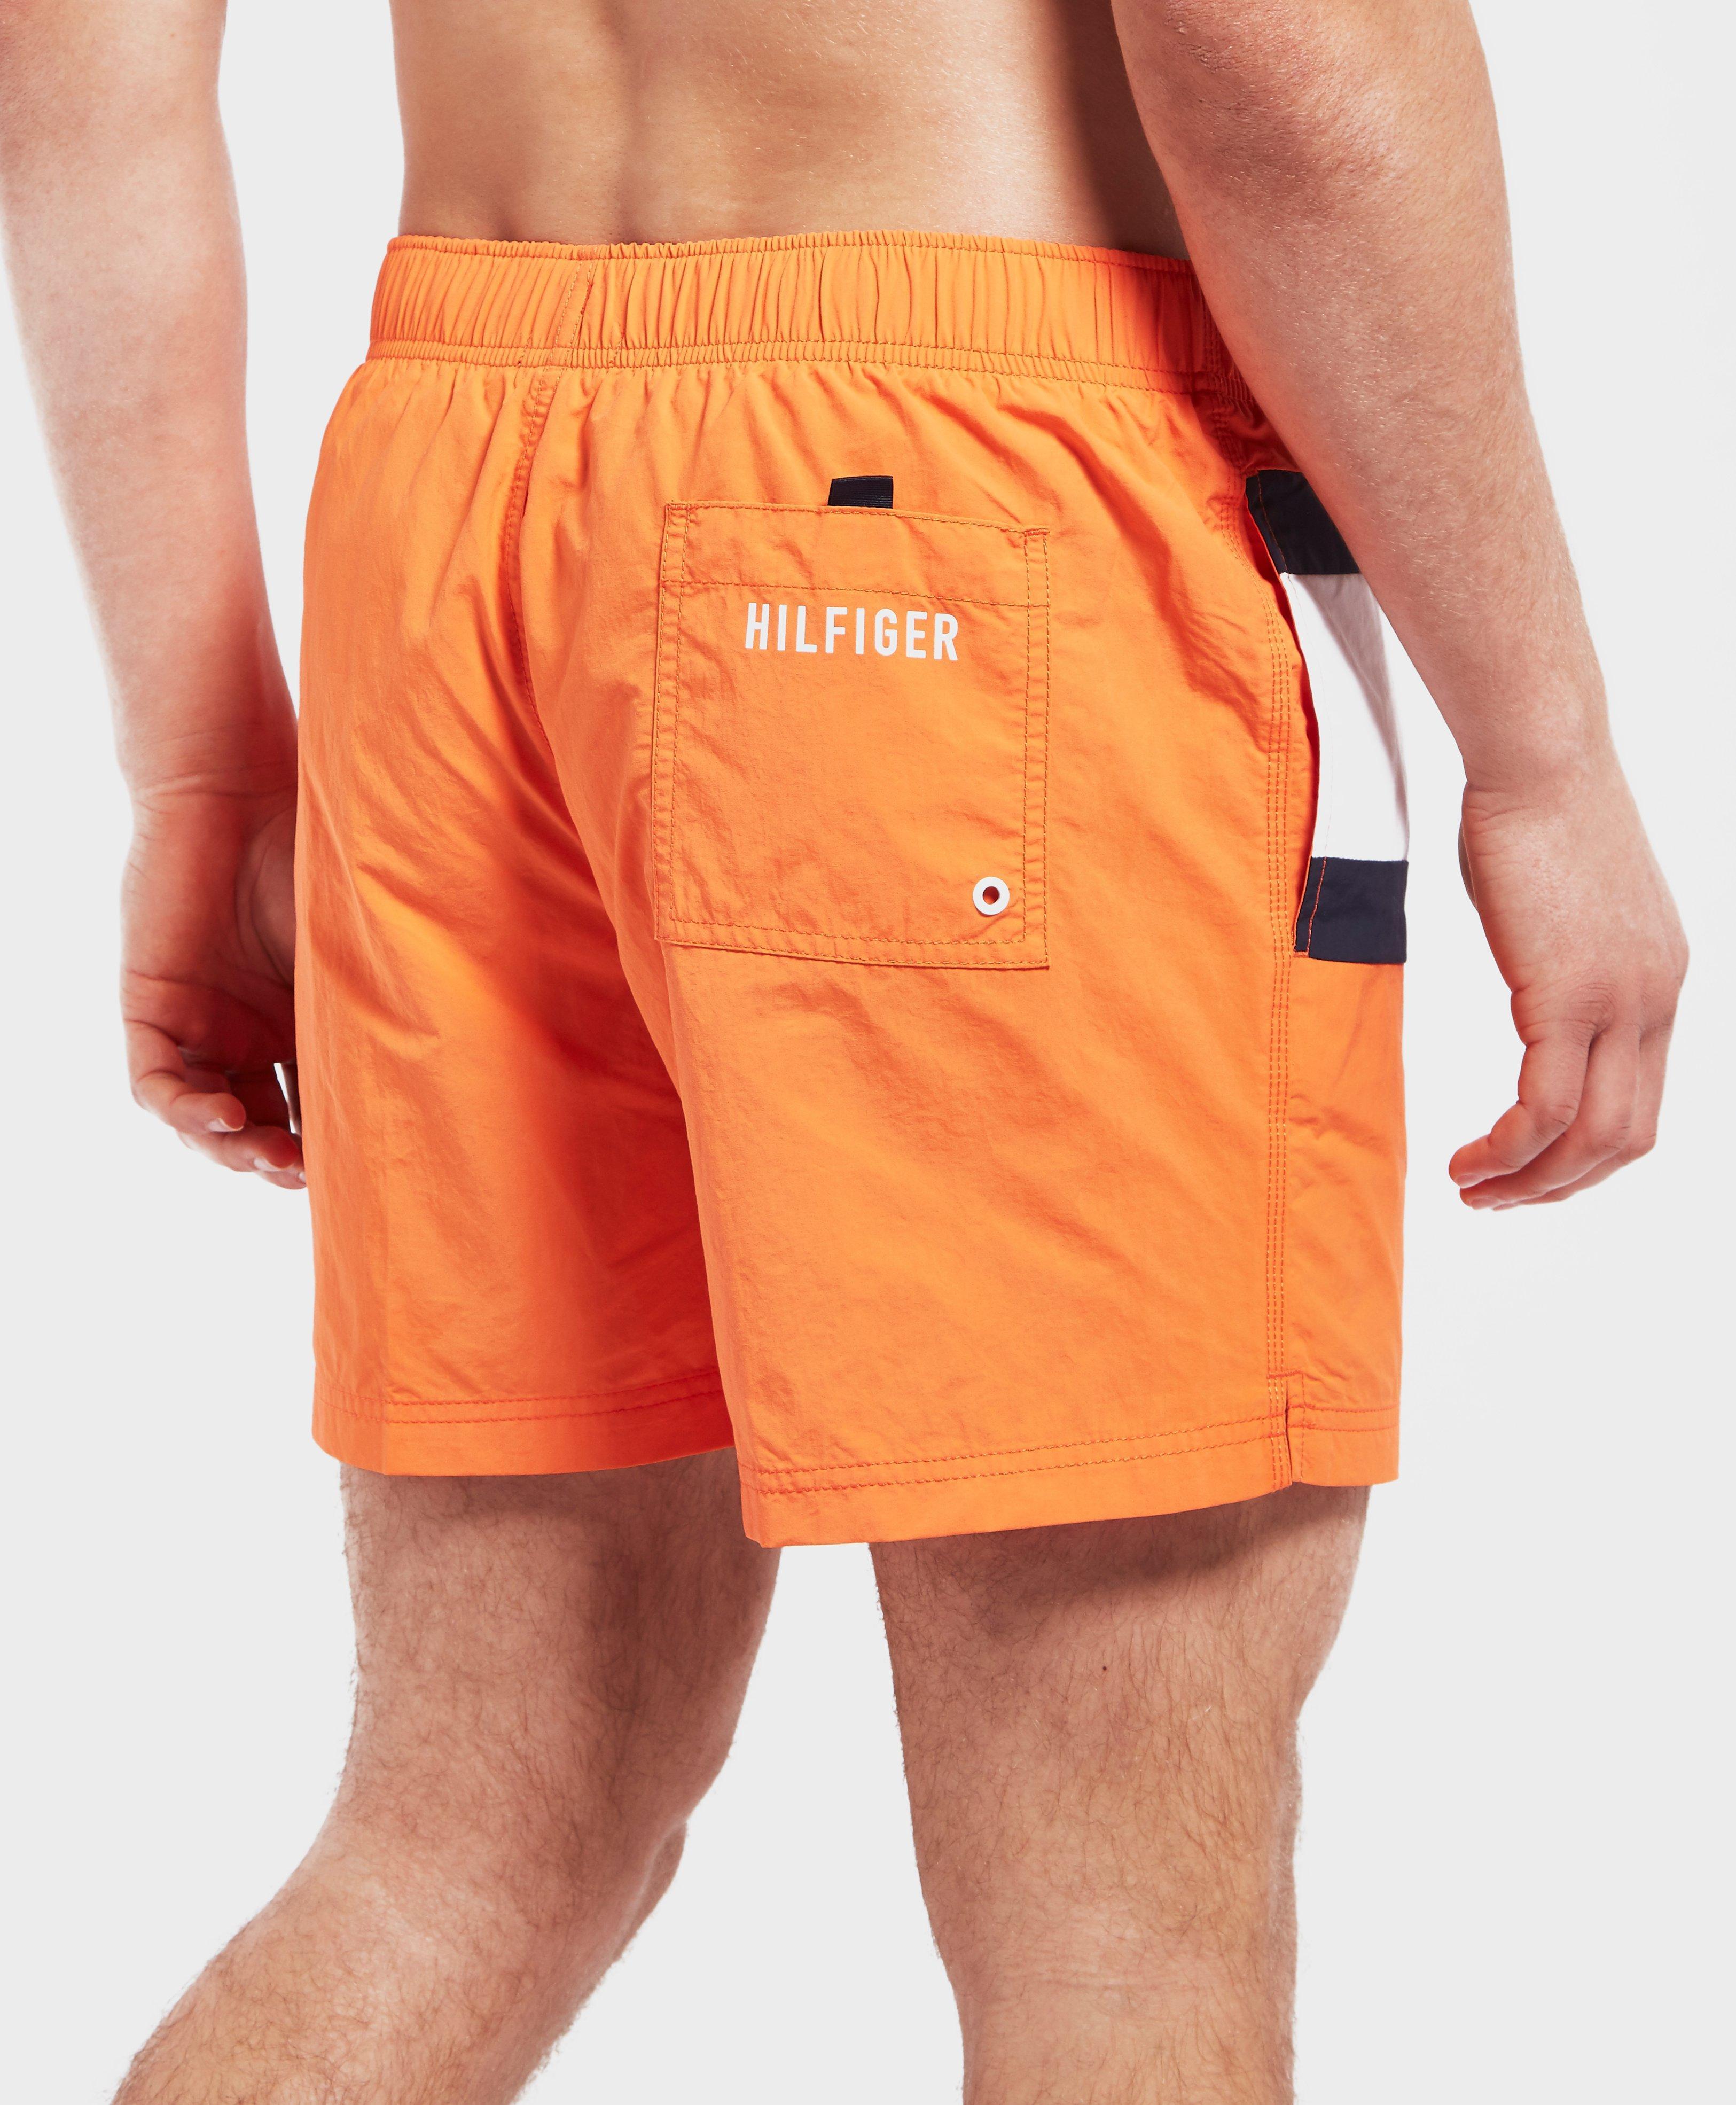 Tommy Hilfiger Synthetic Central Flag Swim Shorts in Orange for Men - Lyst